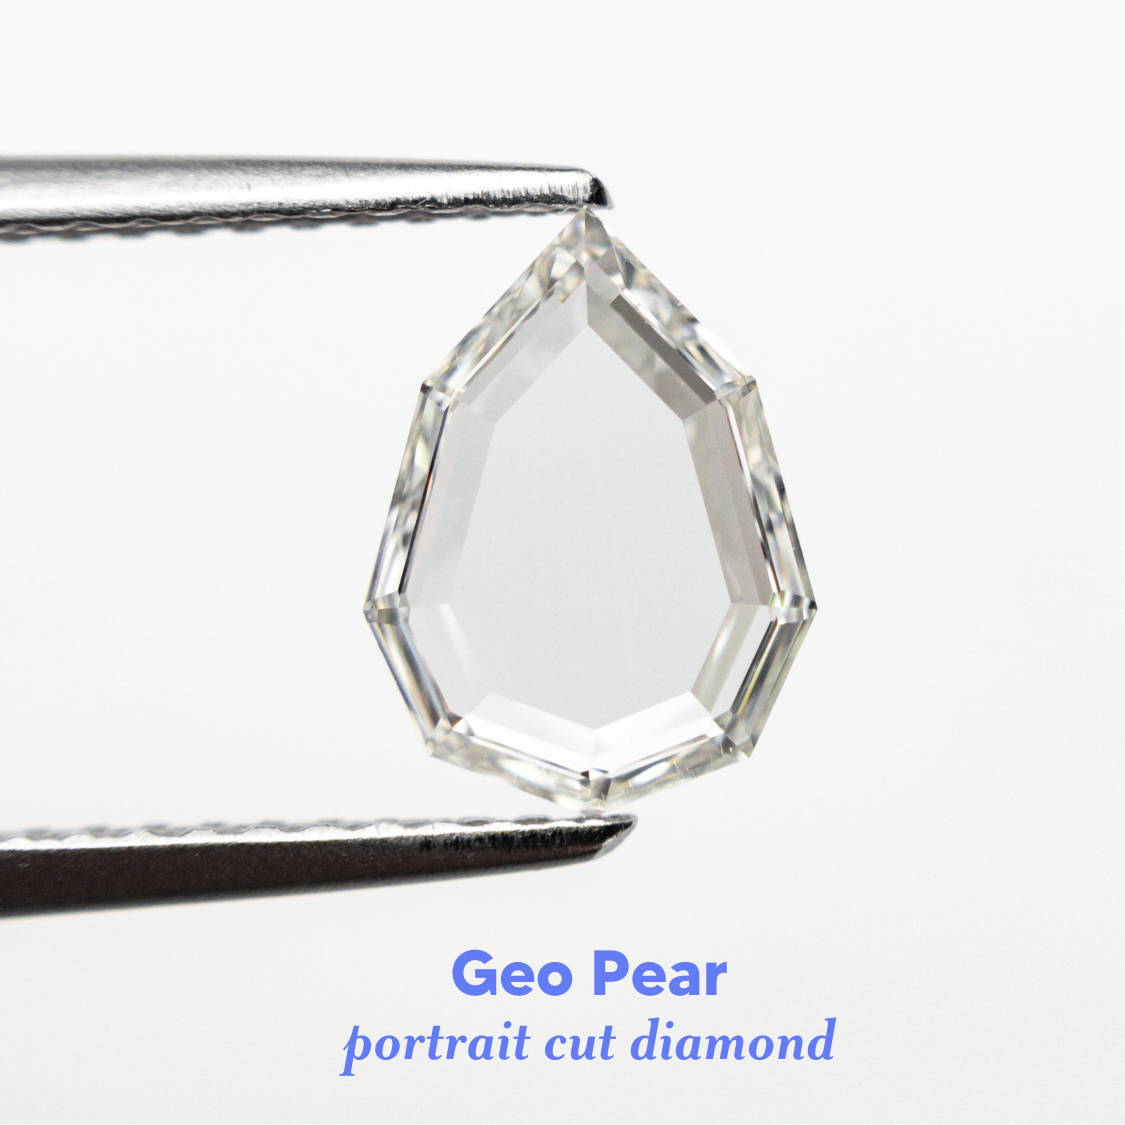 geo pear portrait cut diamond